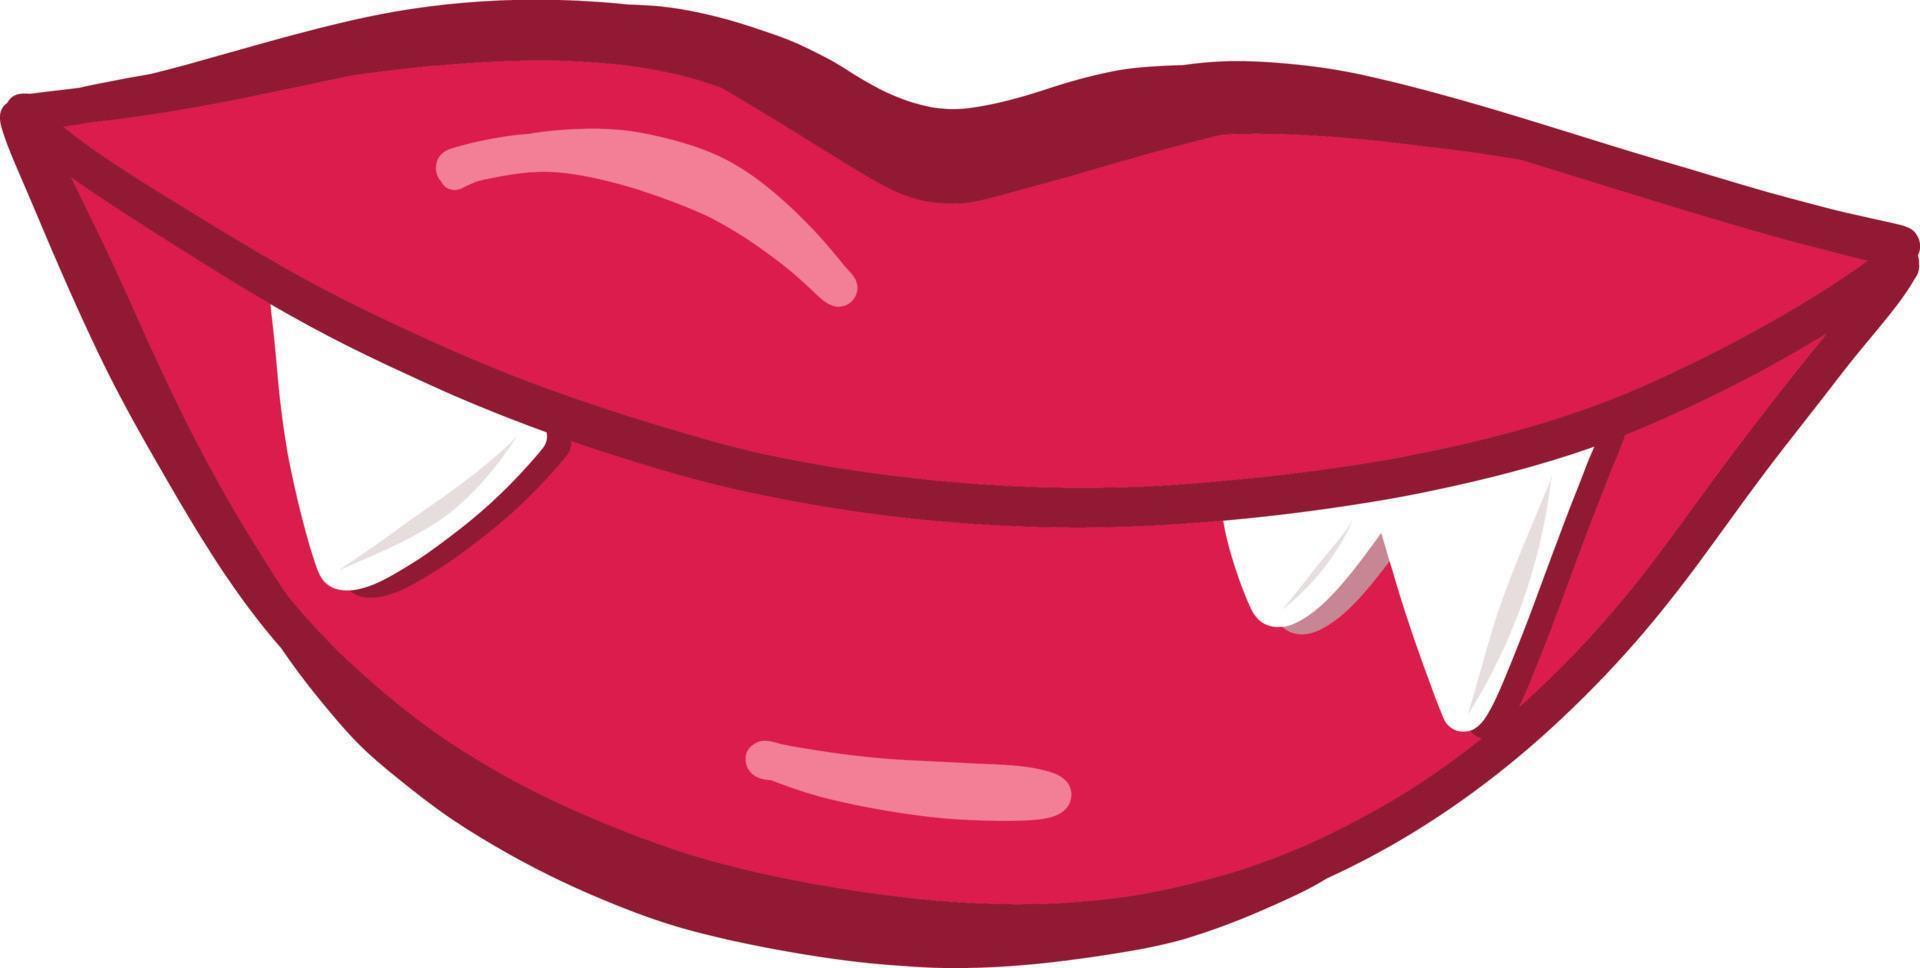 Comic-Ausdruck des bösen Mundes isoliert. rote Lippen. vektor